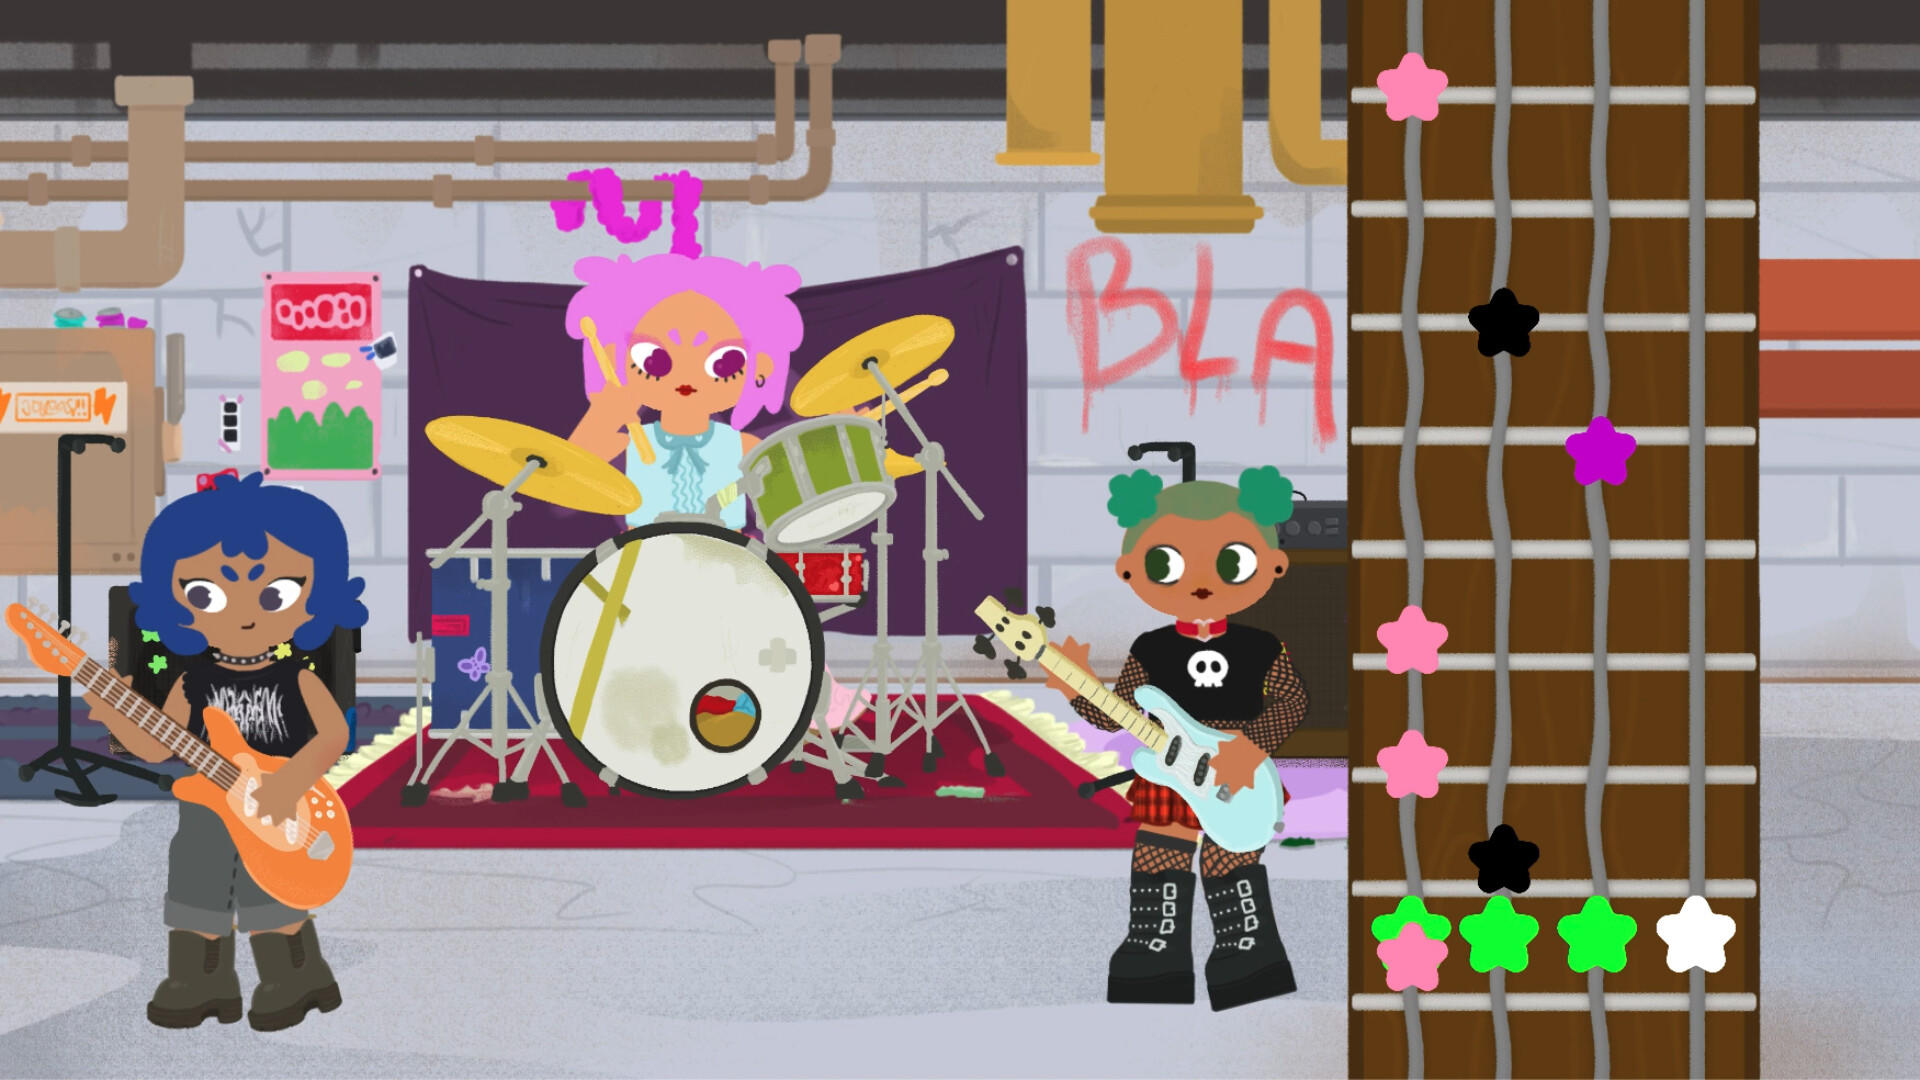 Screenshot 1 of Jus Punk 